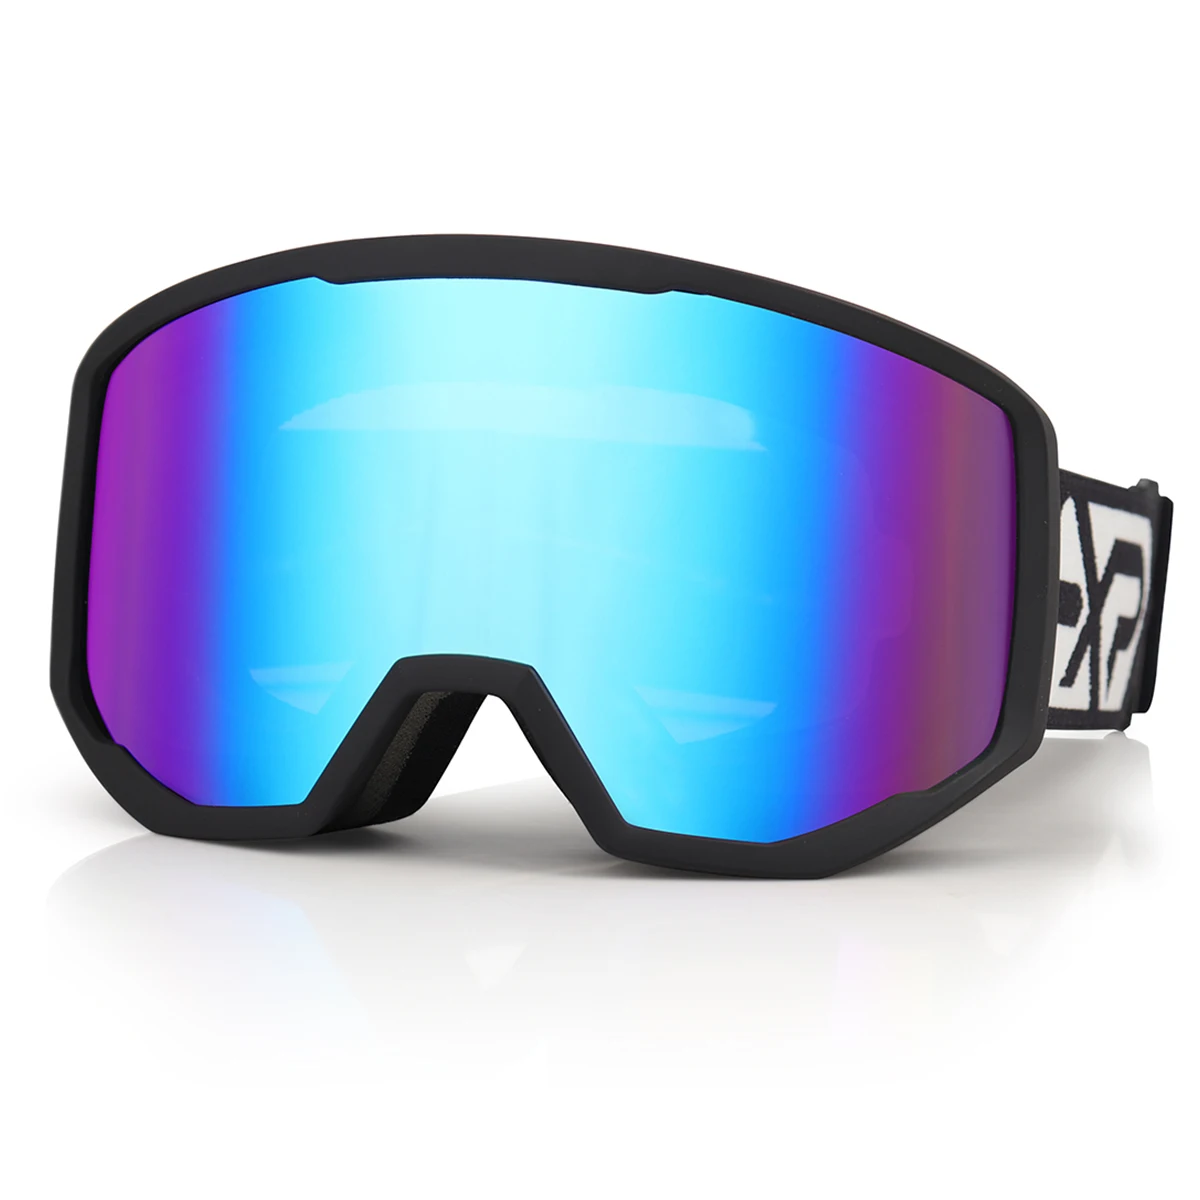 EXP VISION Ski Goggles Snowboard for Men Women, OTG Anti Fog UV Protection Snowboard Glasses Winter Eye Wear for AdultGoggles